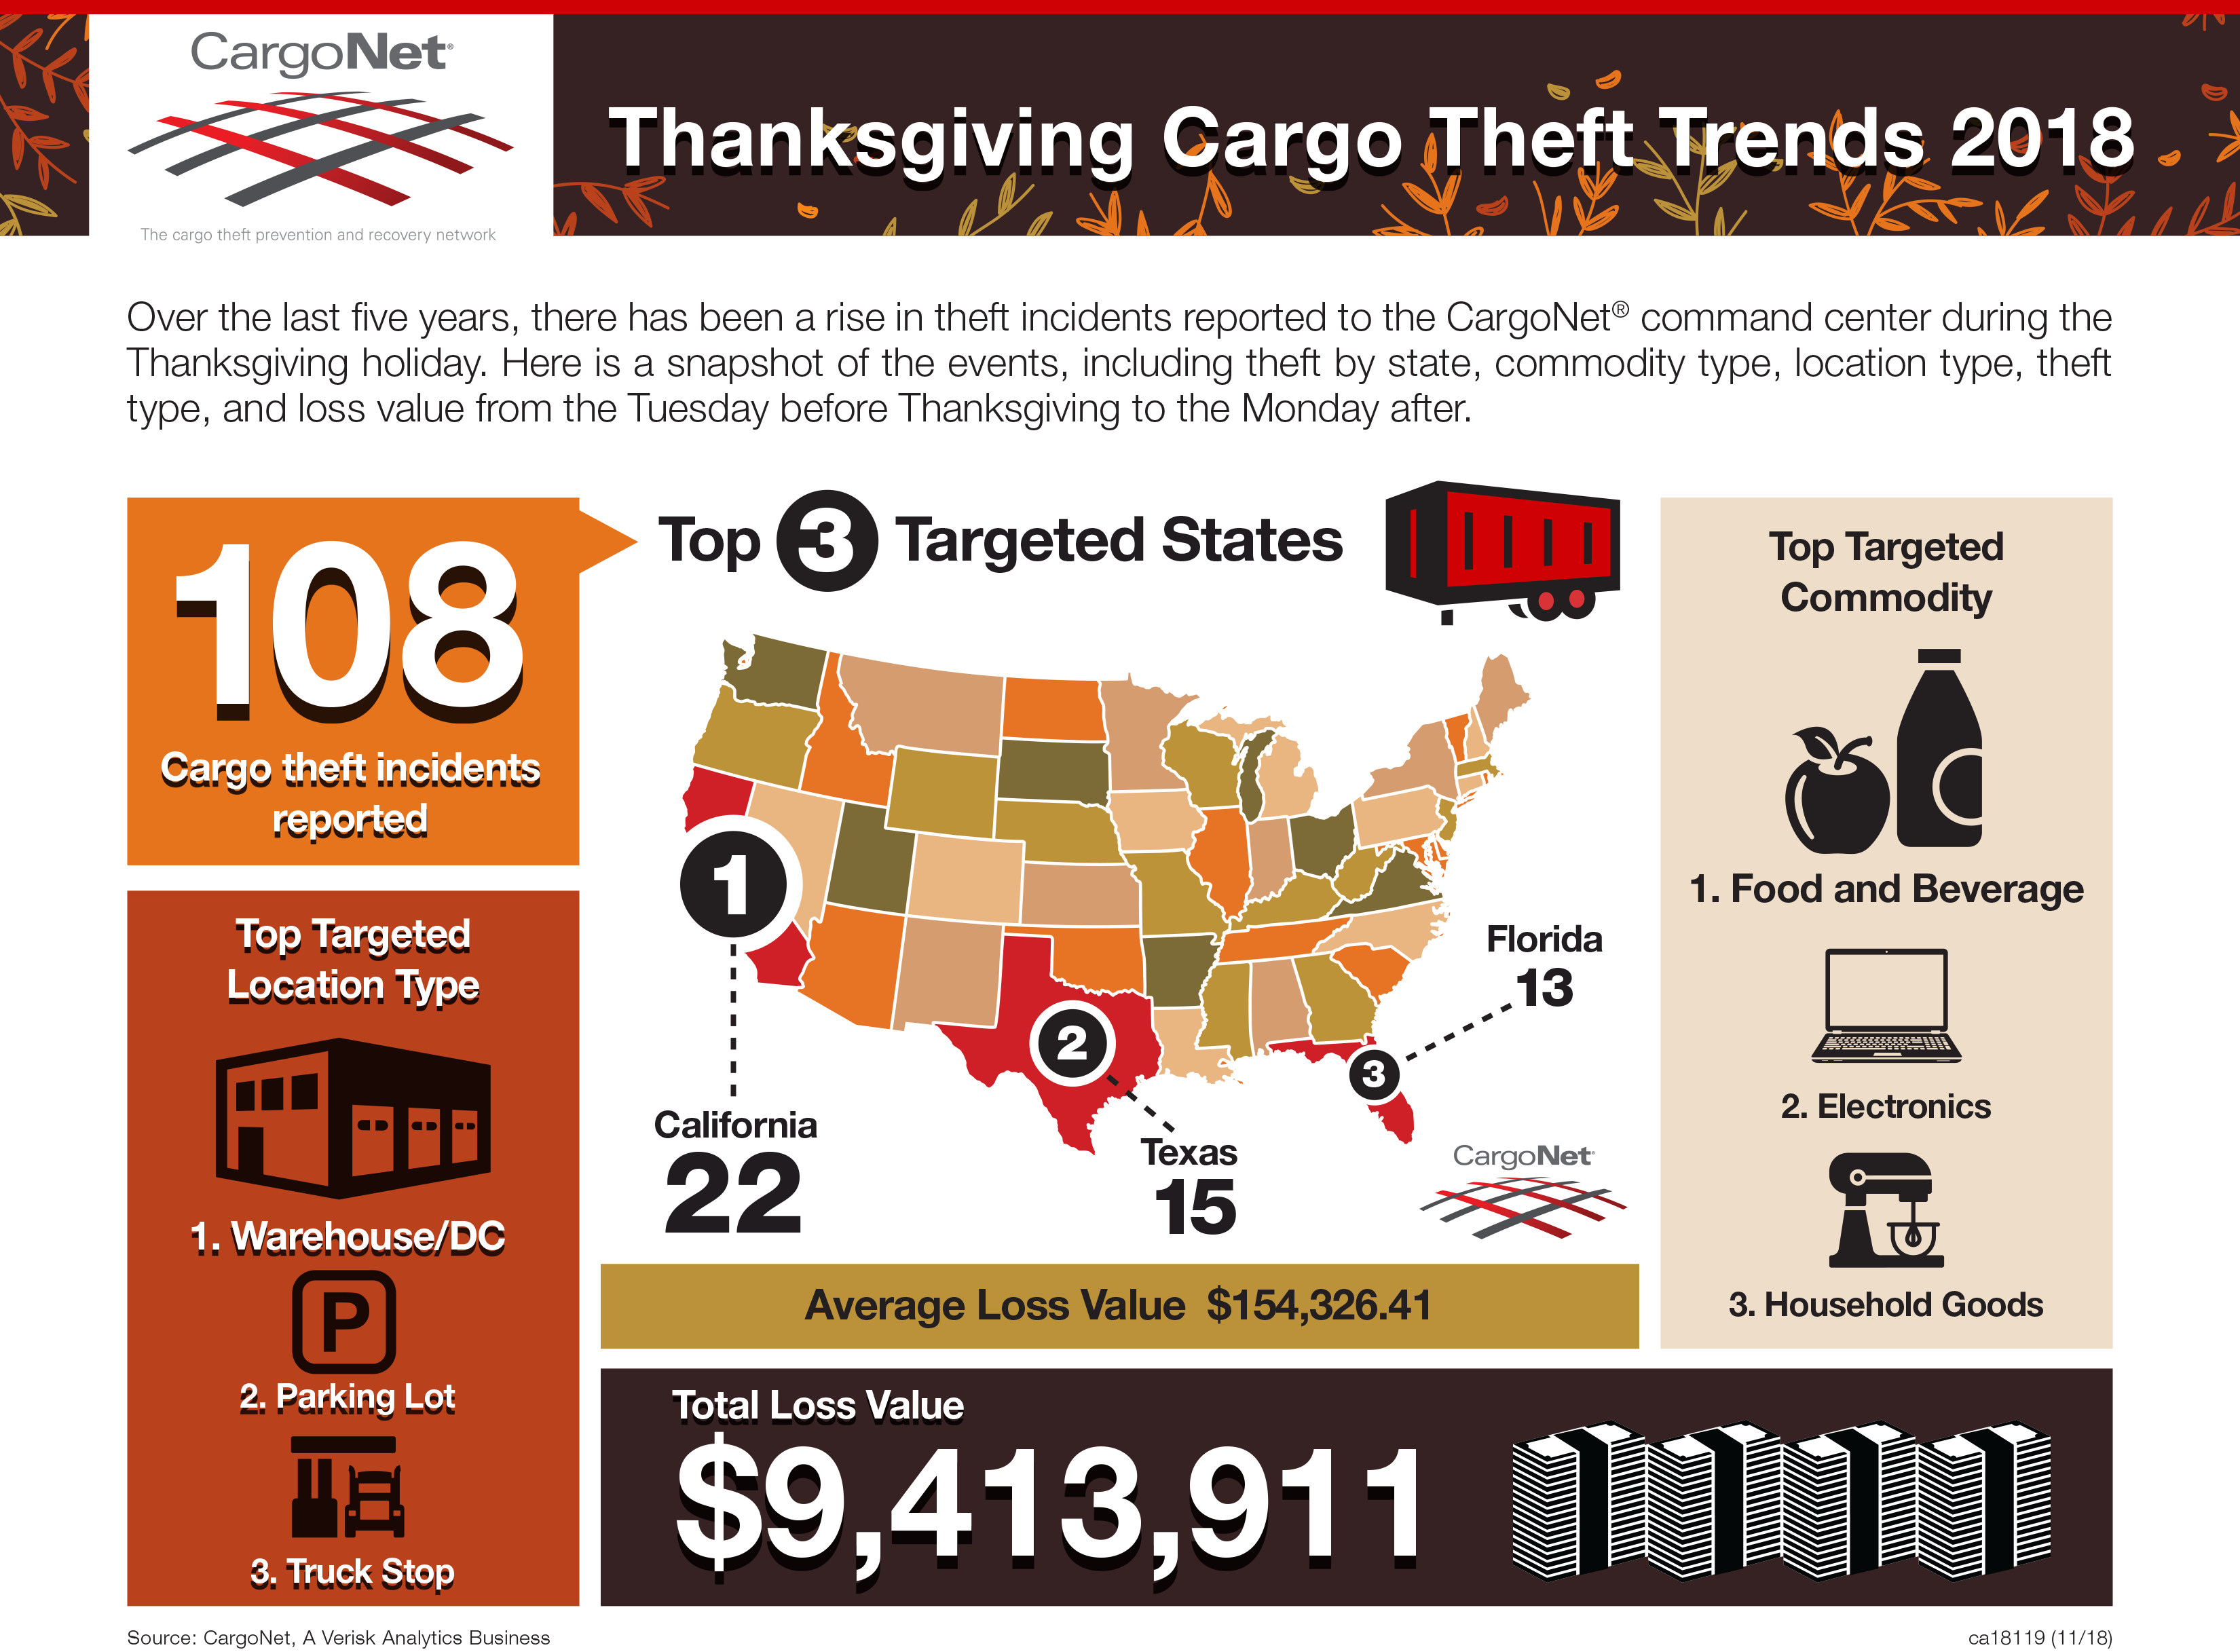 CargoNet-Thanksgiving-Cargo-Theft-Trends-2018-1